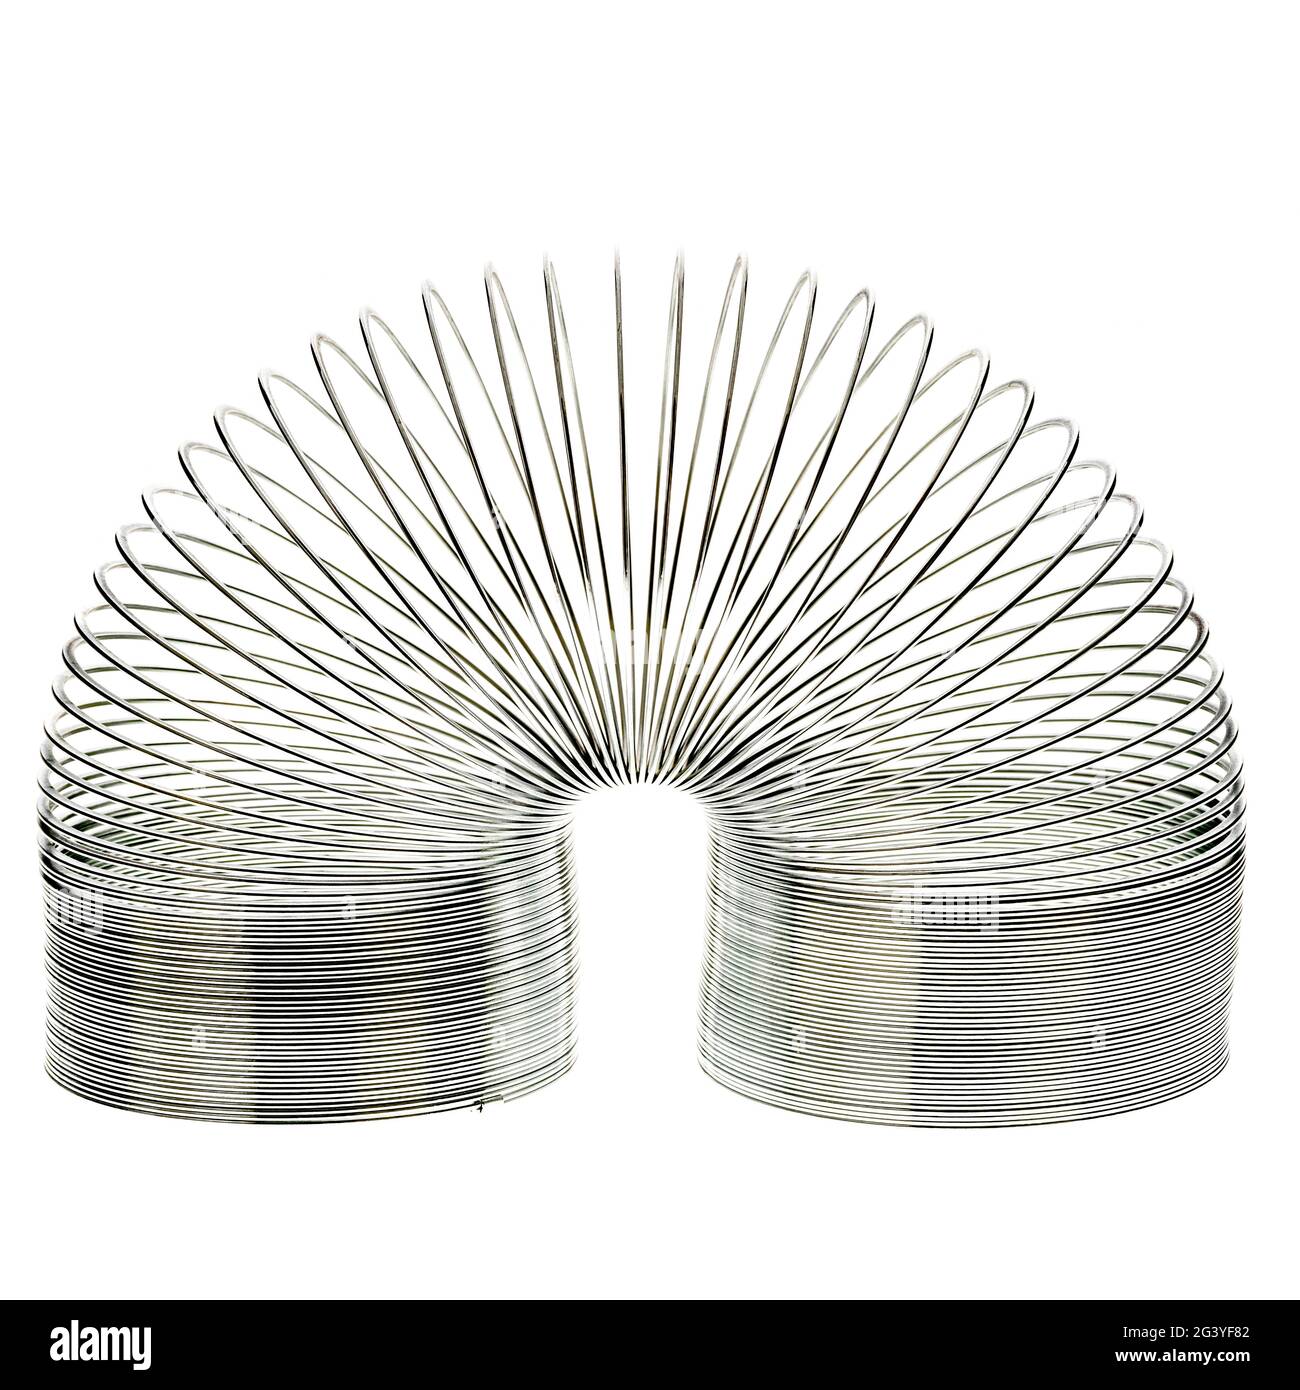 Metal Slinky spring toy on white background Stock Photo